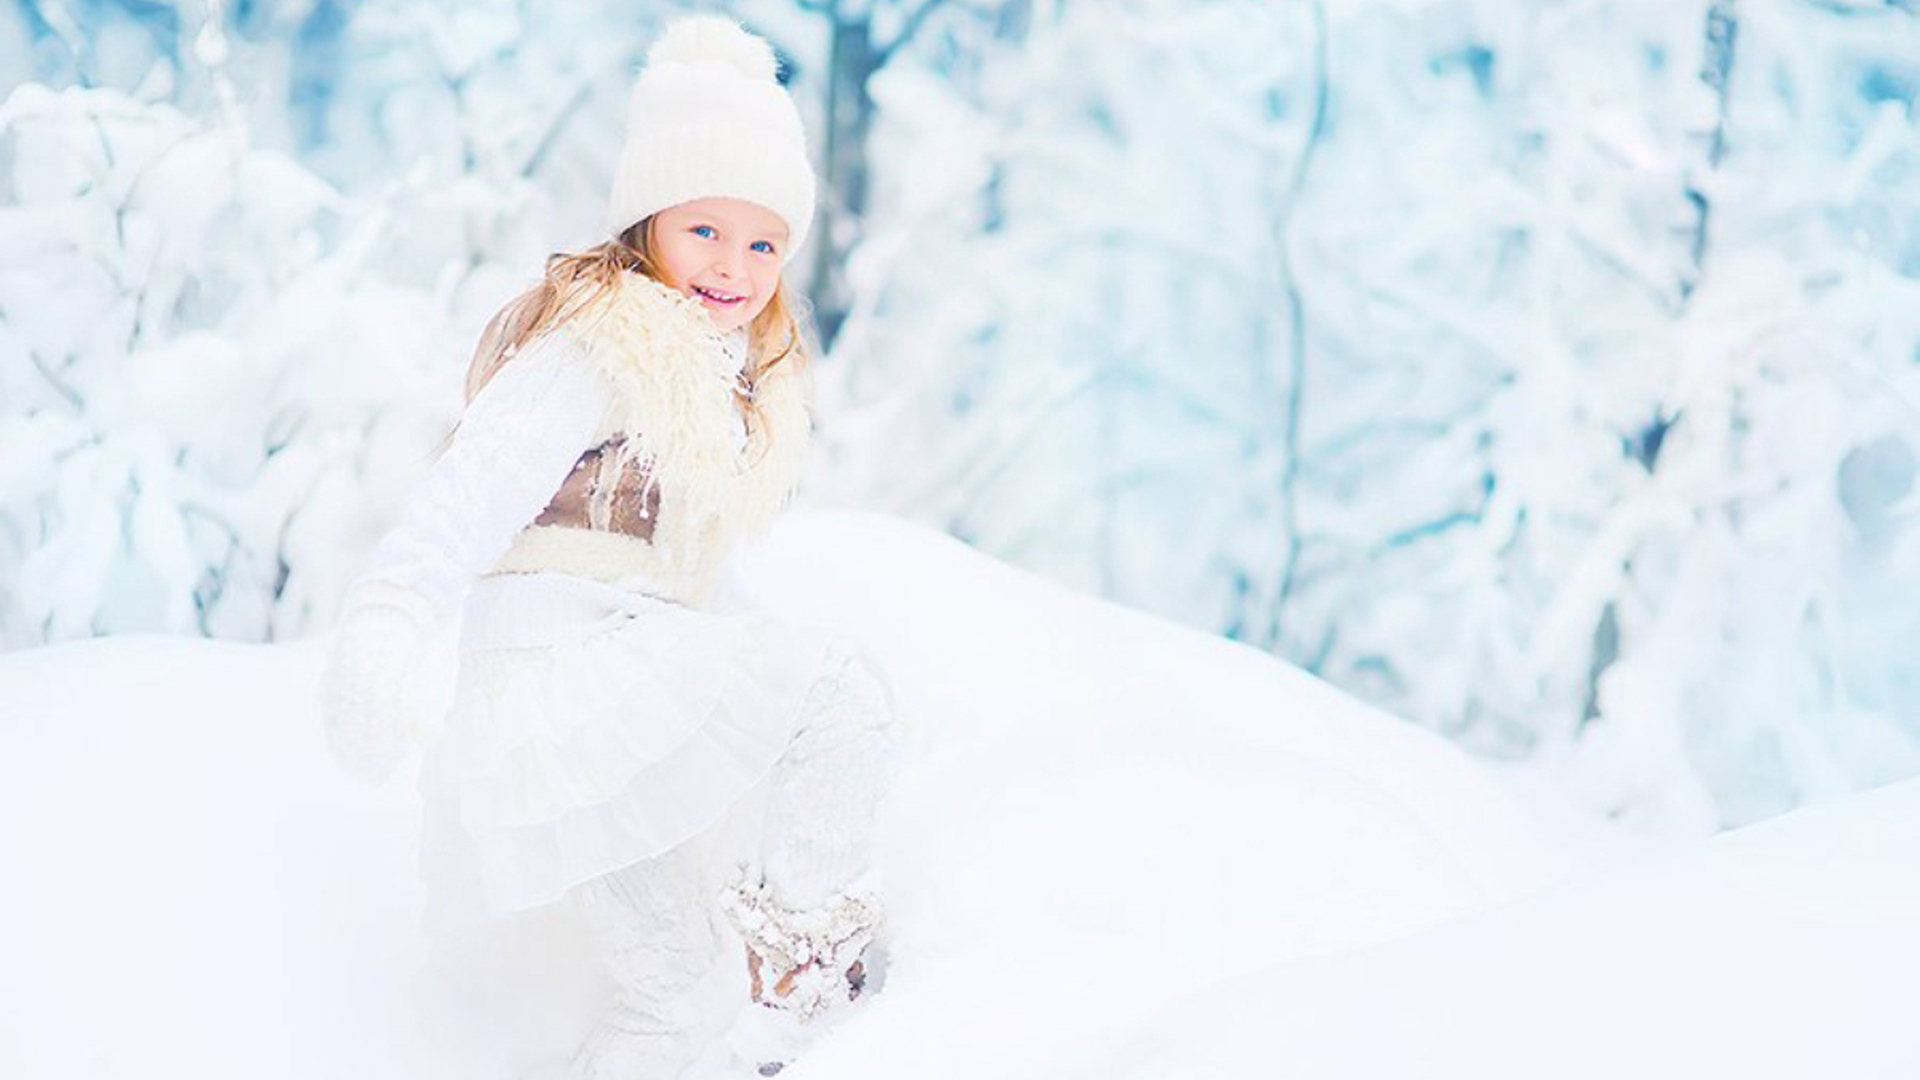 Blue Eyes Smiley Cute Little Girl Is Wearing White Woolen Knitted Dress And Cap Standing In Snow Field Wallpaper 2K Cute